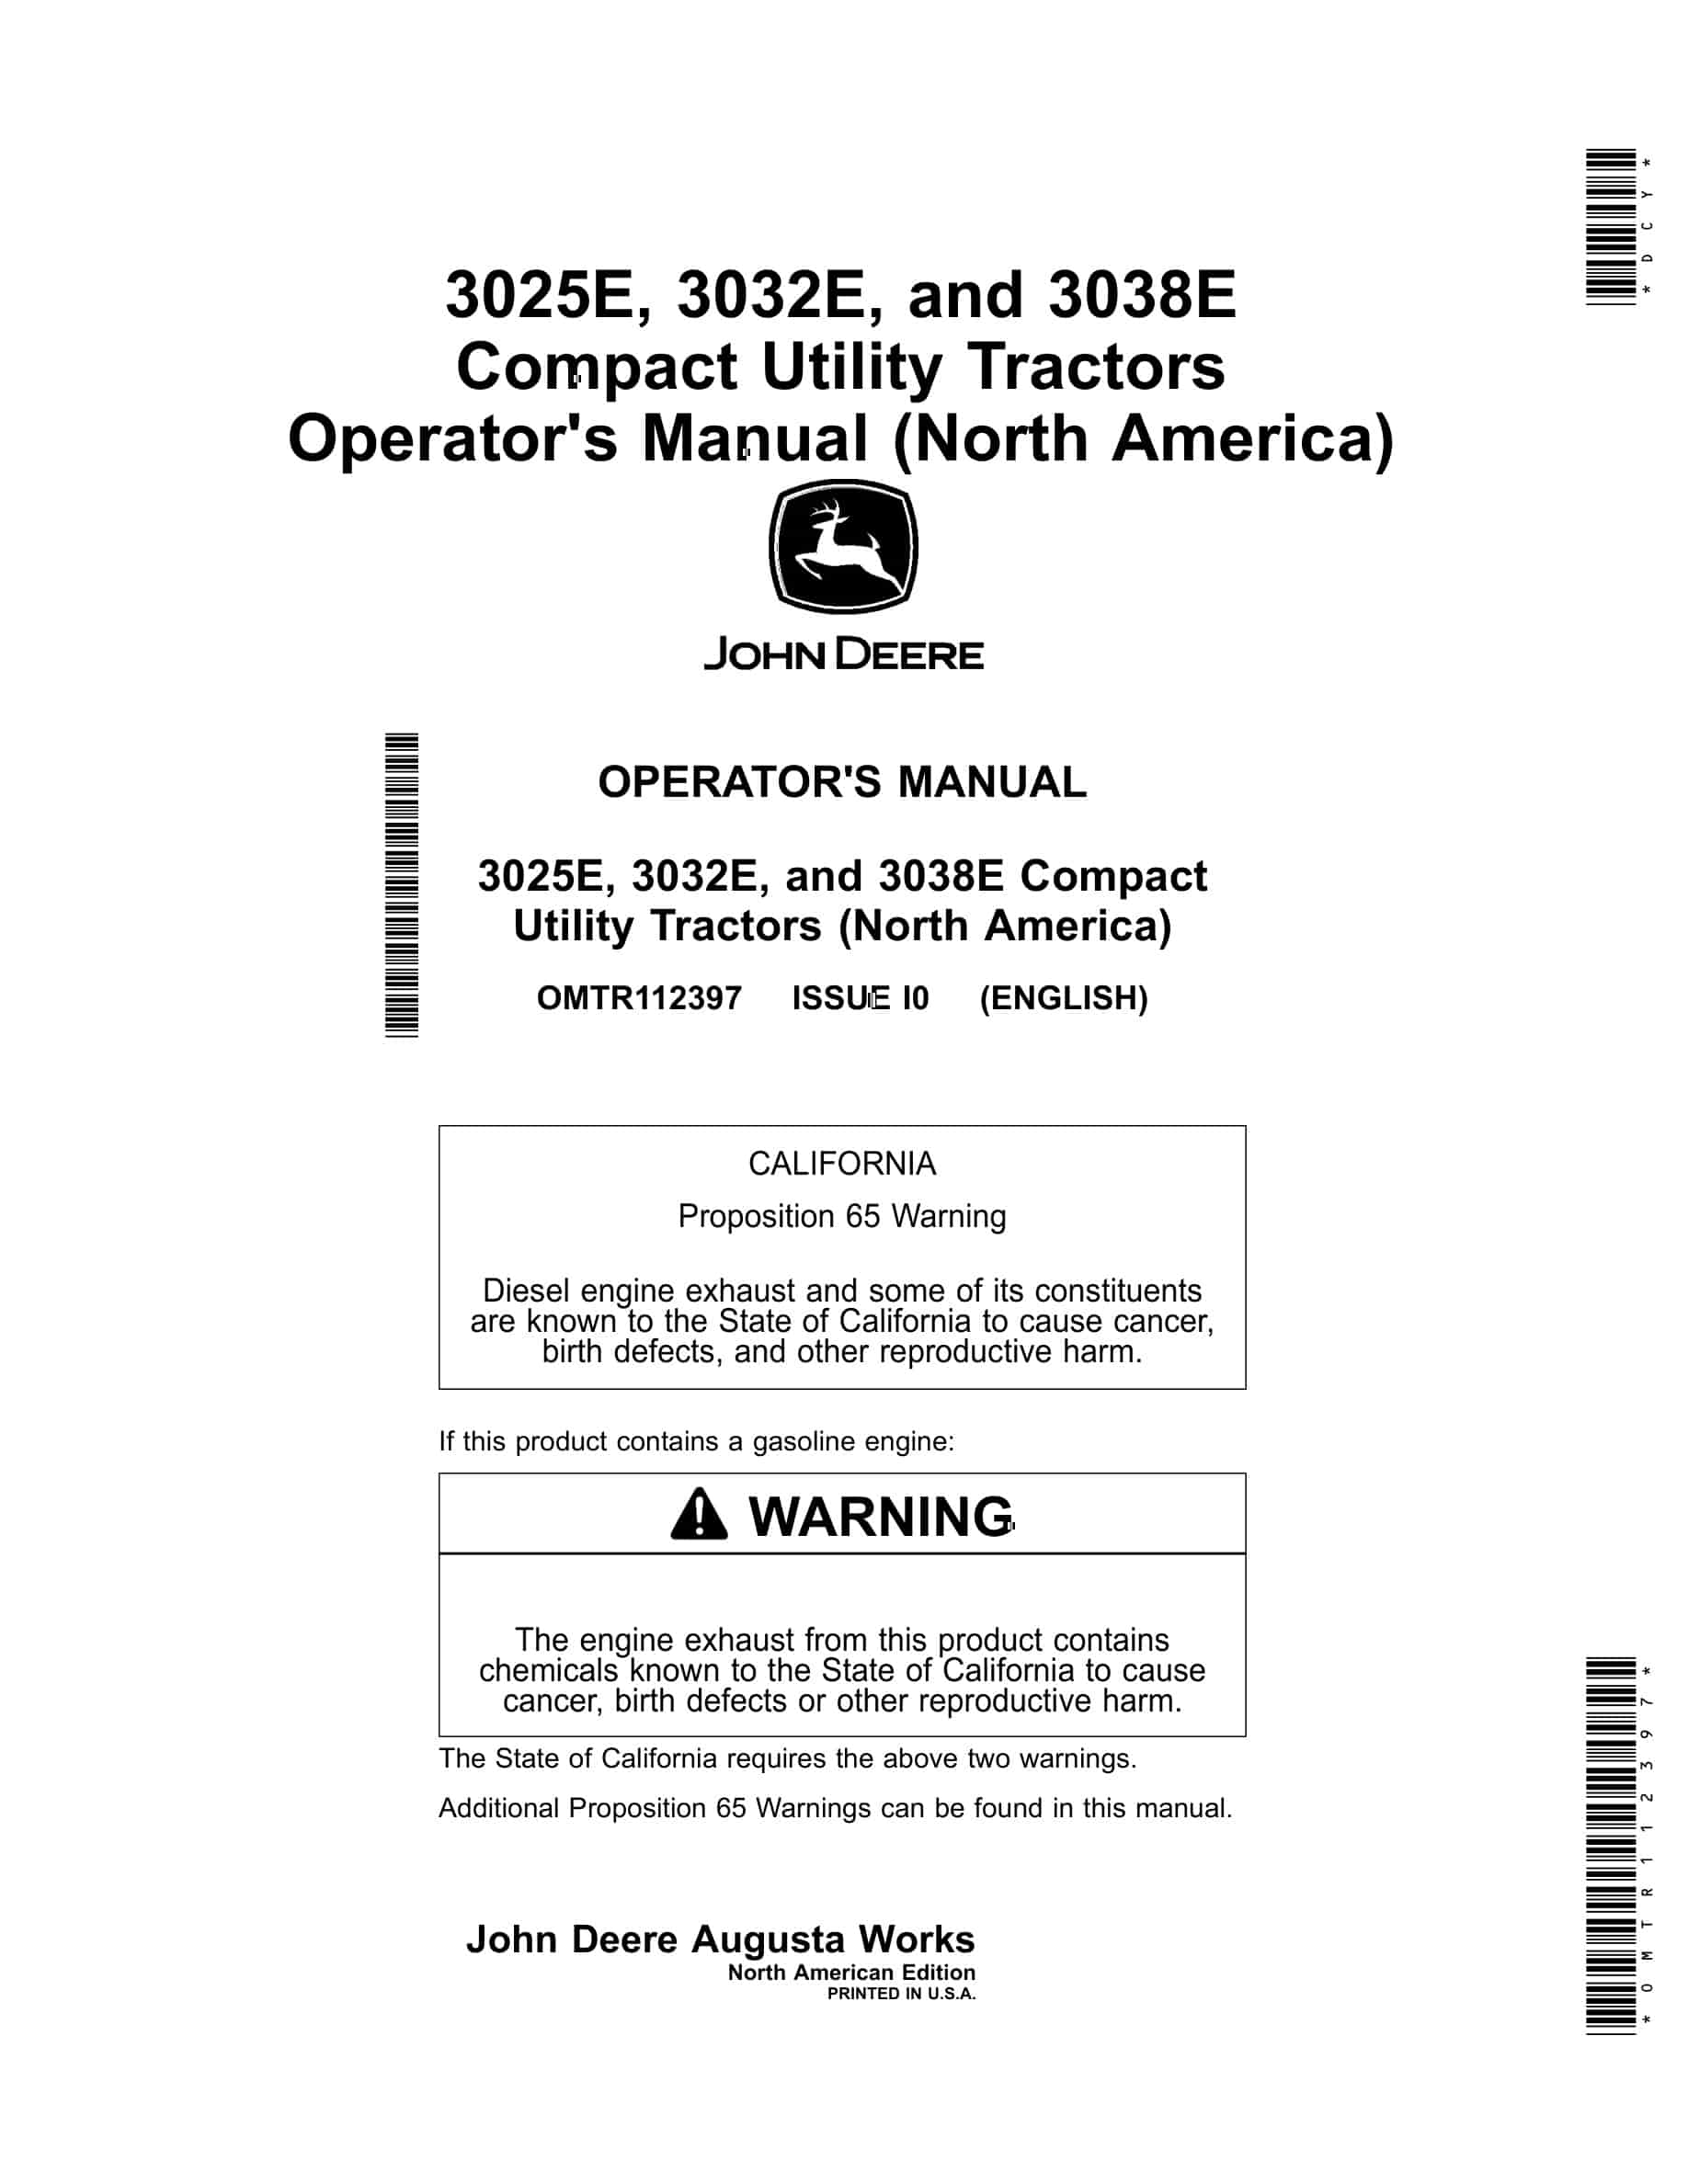 John Deere 3025E, 3032E, and 3038E Tractor Operator Manual OMTR112397-1